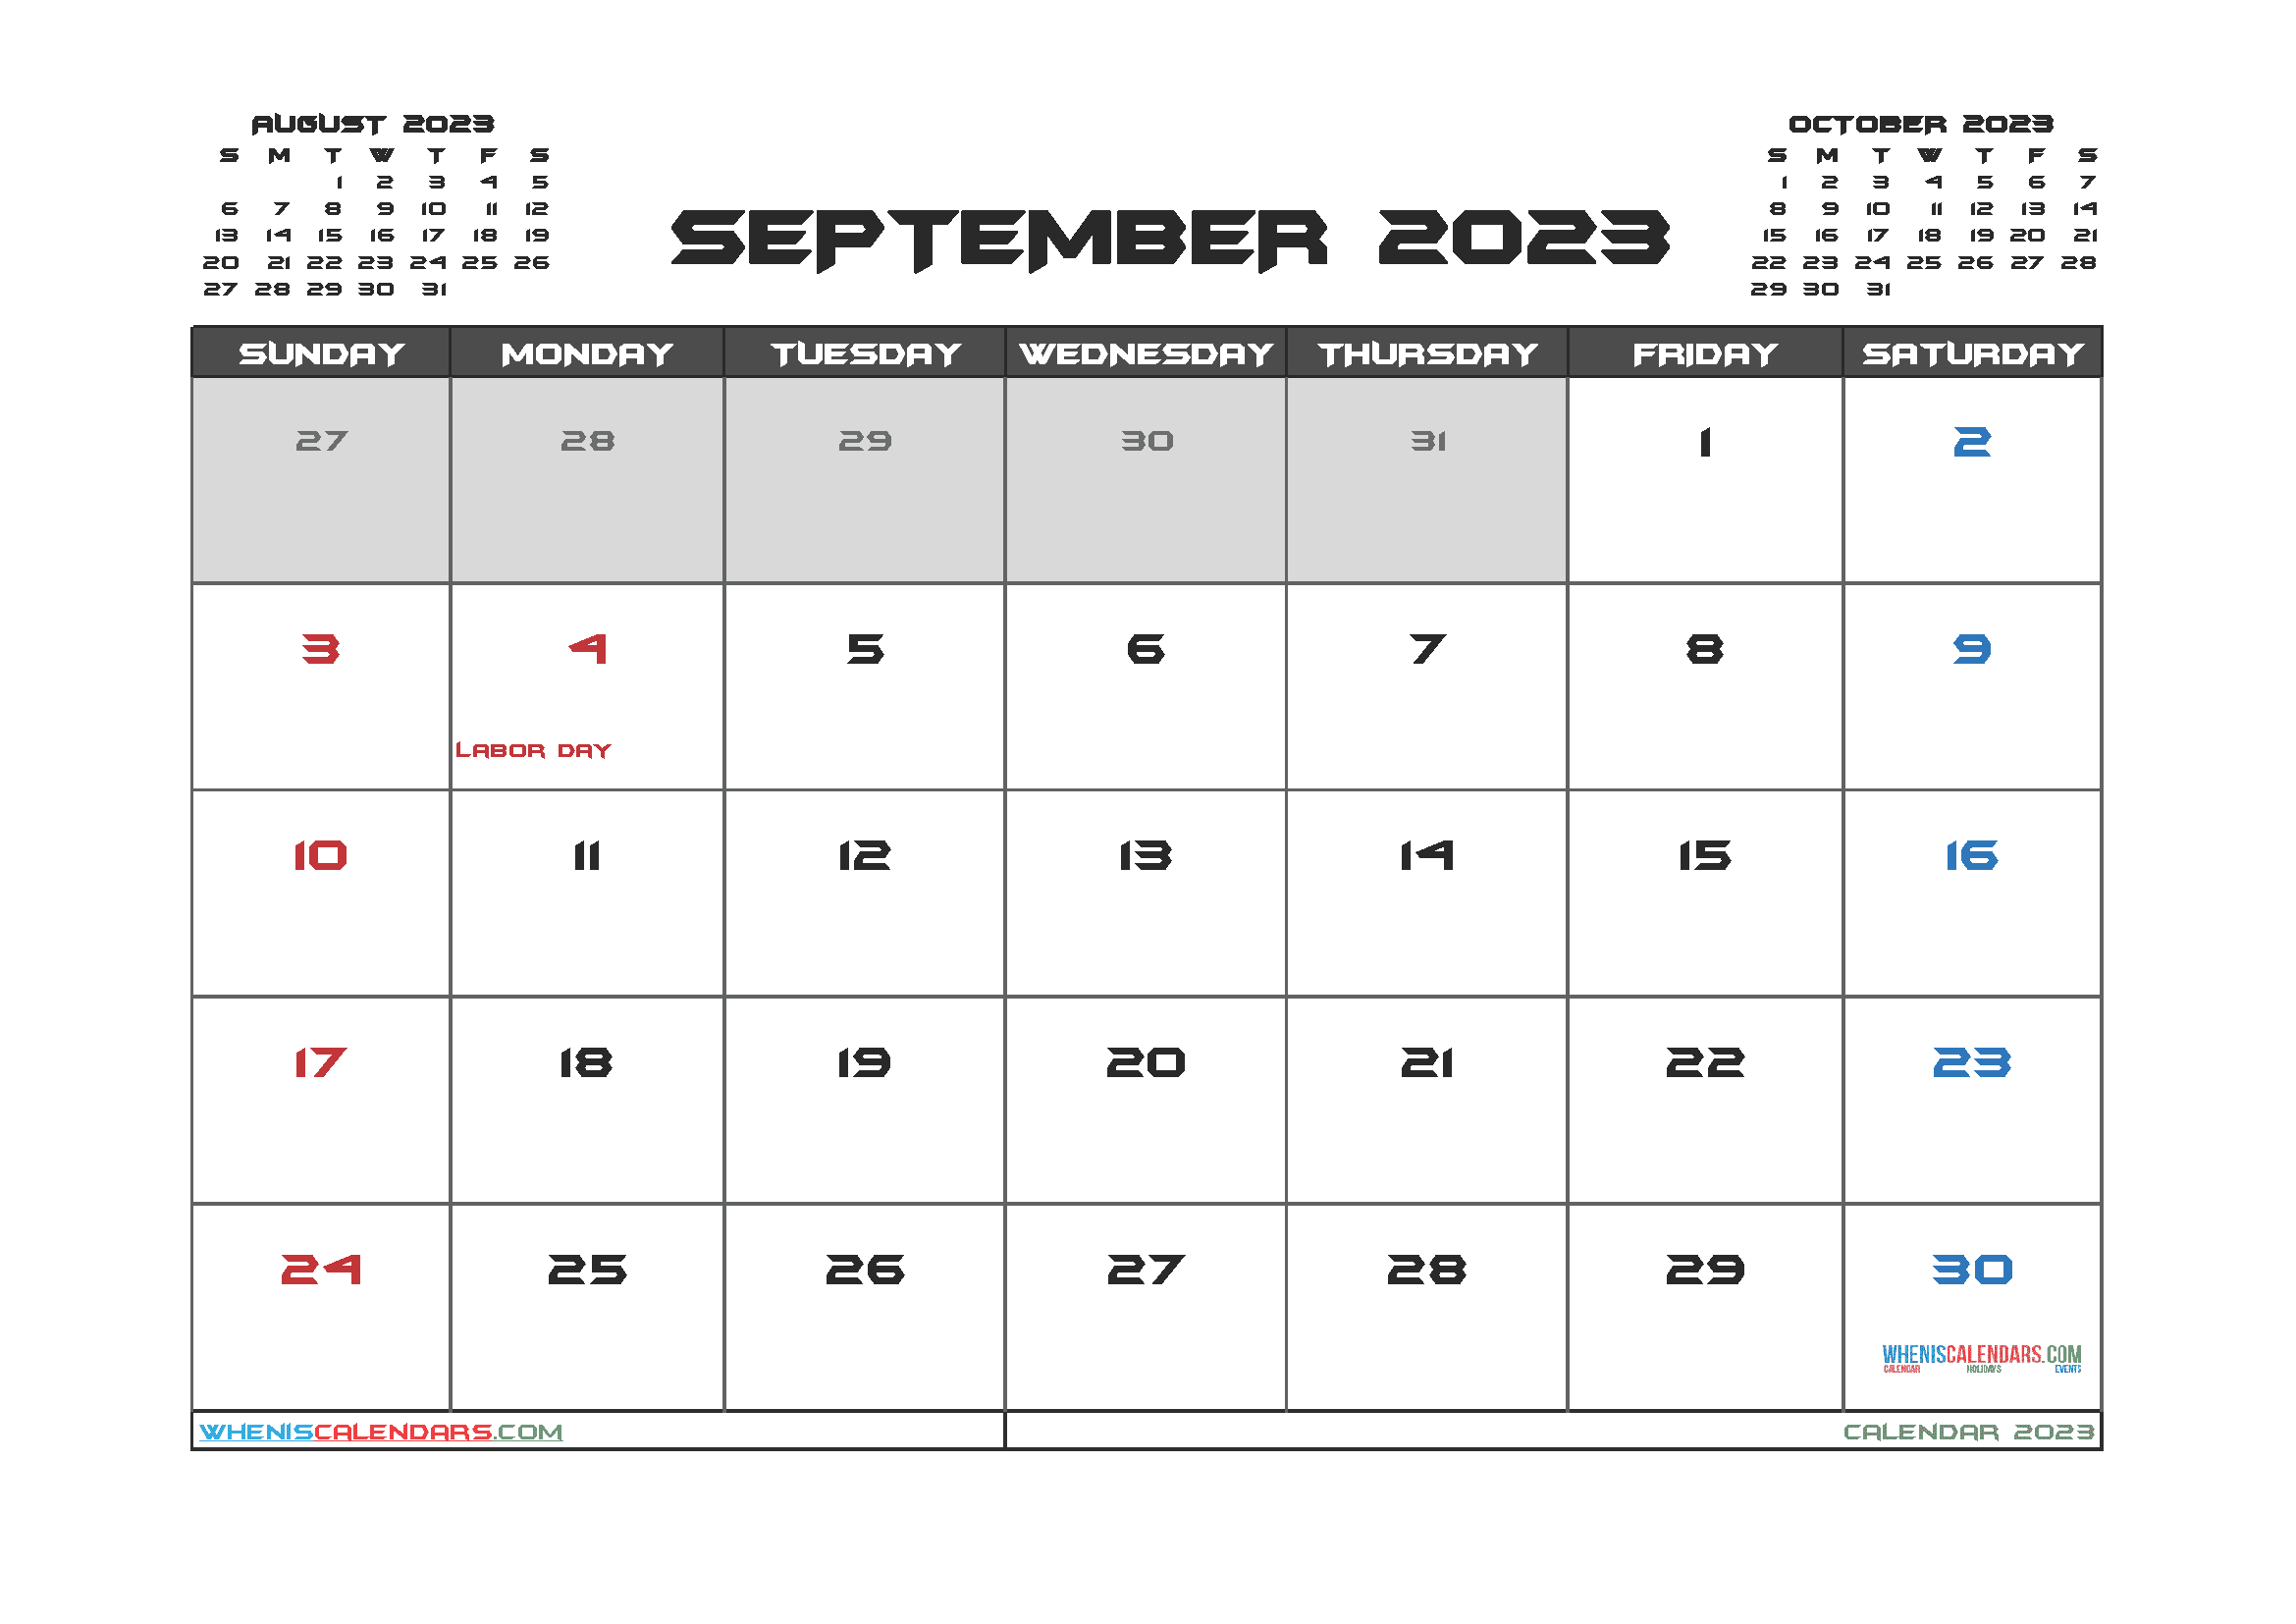 September 2023 Calendar with Holidays Free Printable PDF in Landscape